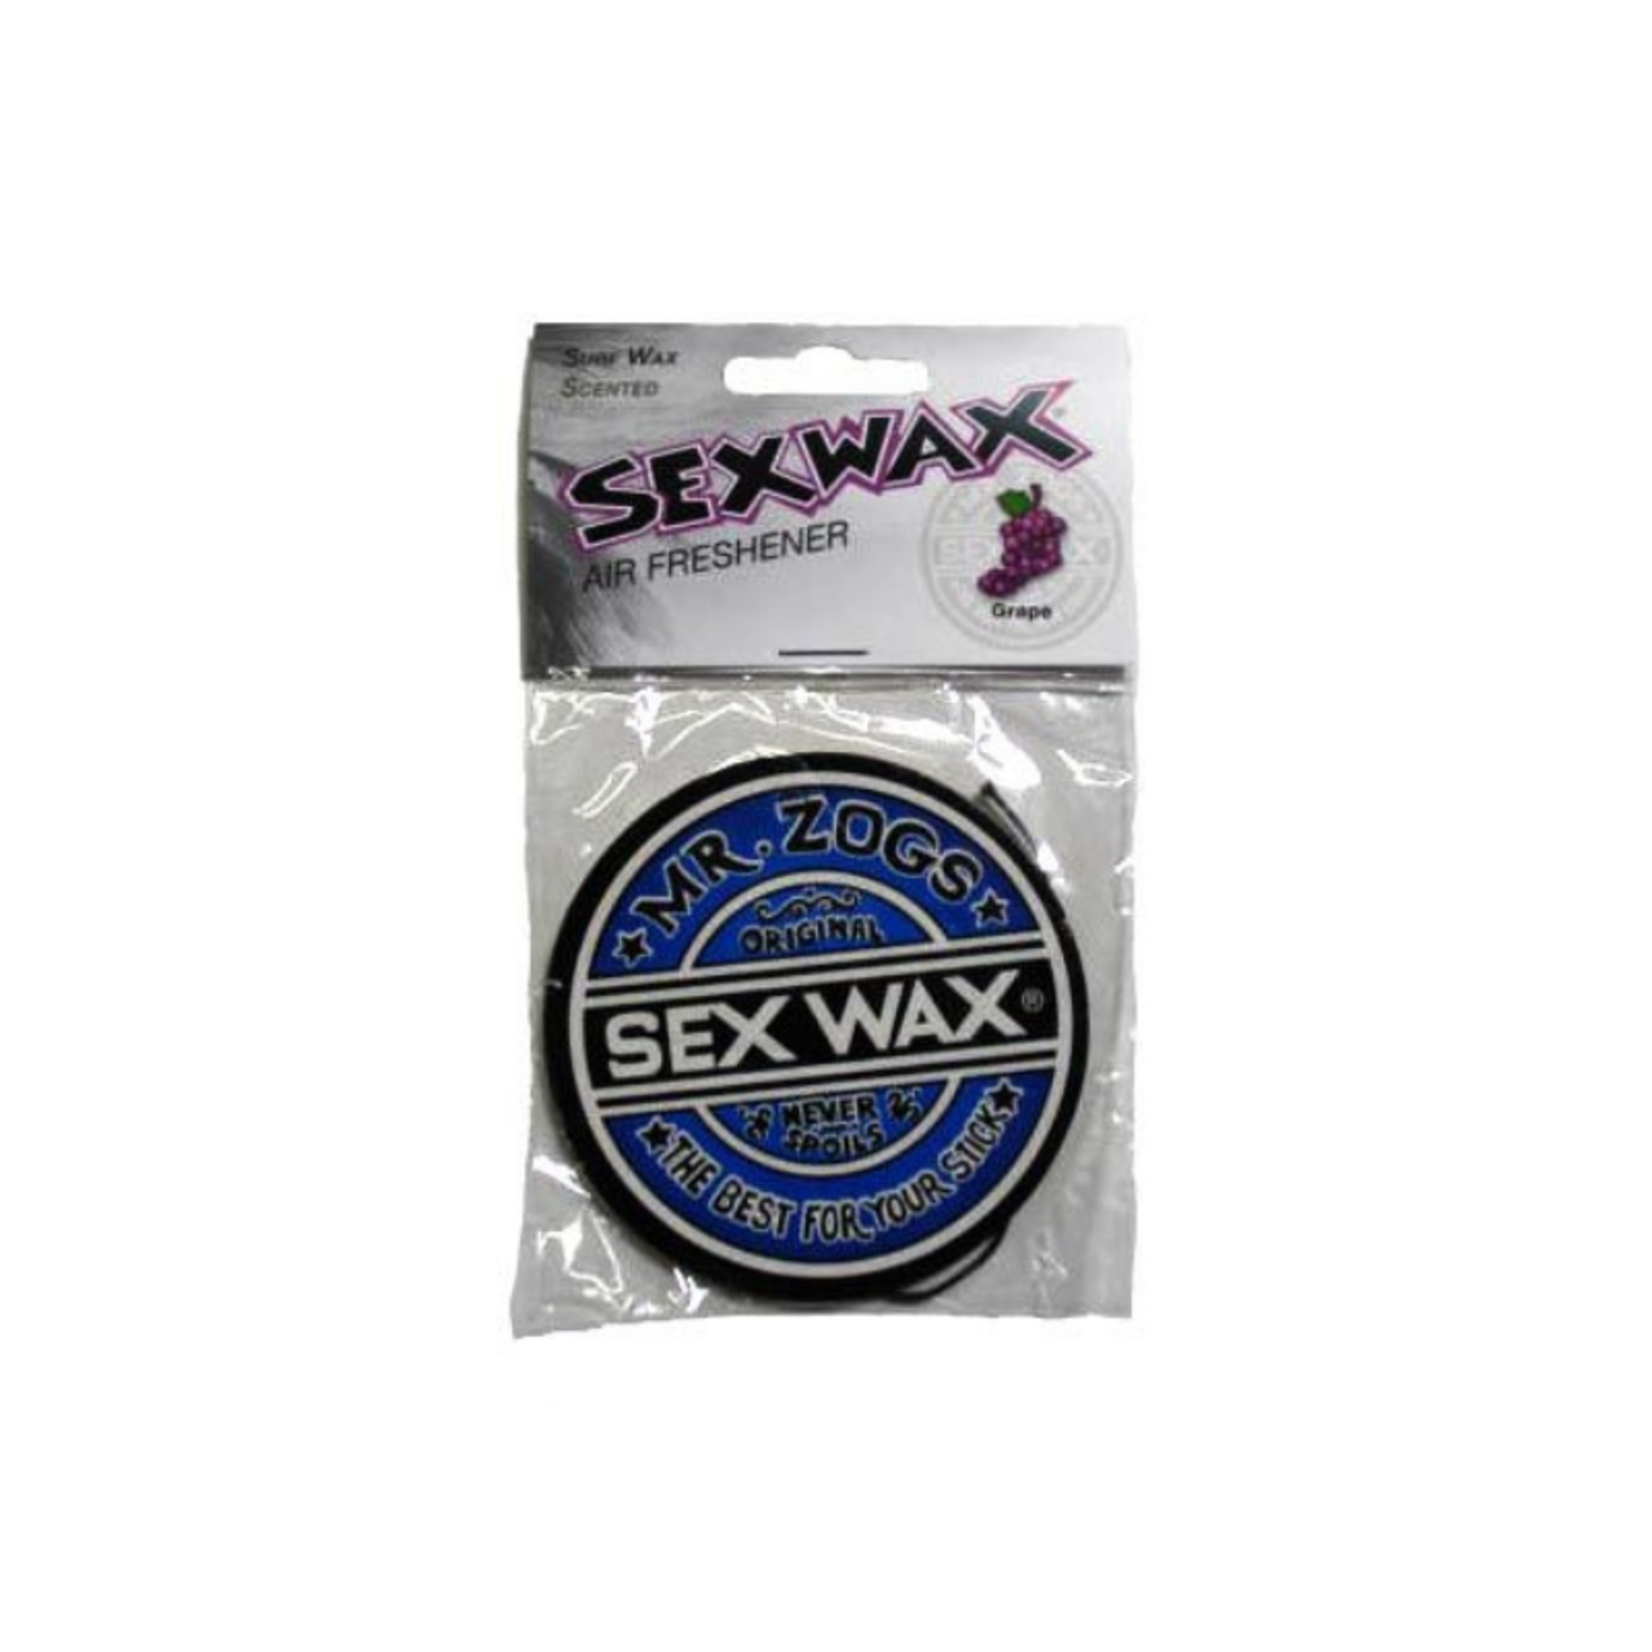 SEX WAX Sex Wax Air Freshener.